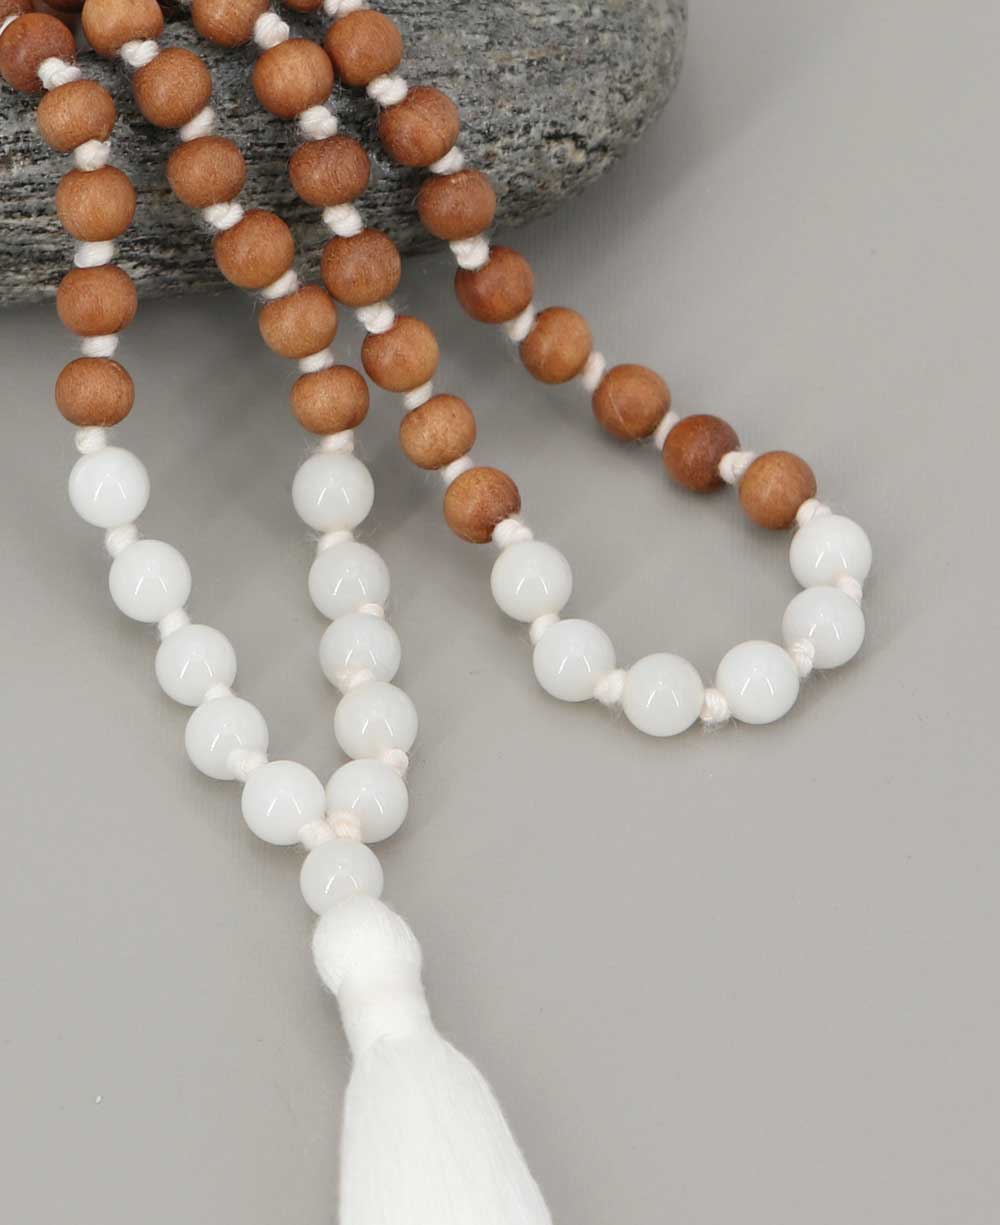 Mala Beads and Buddhist Japa Mala For Meditation & Yoga Practice – Buddha  Groove